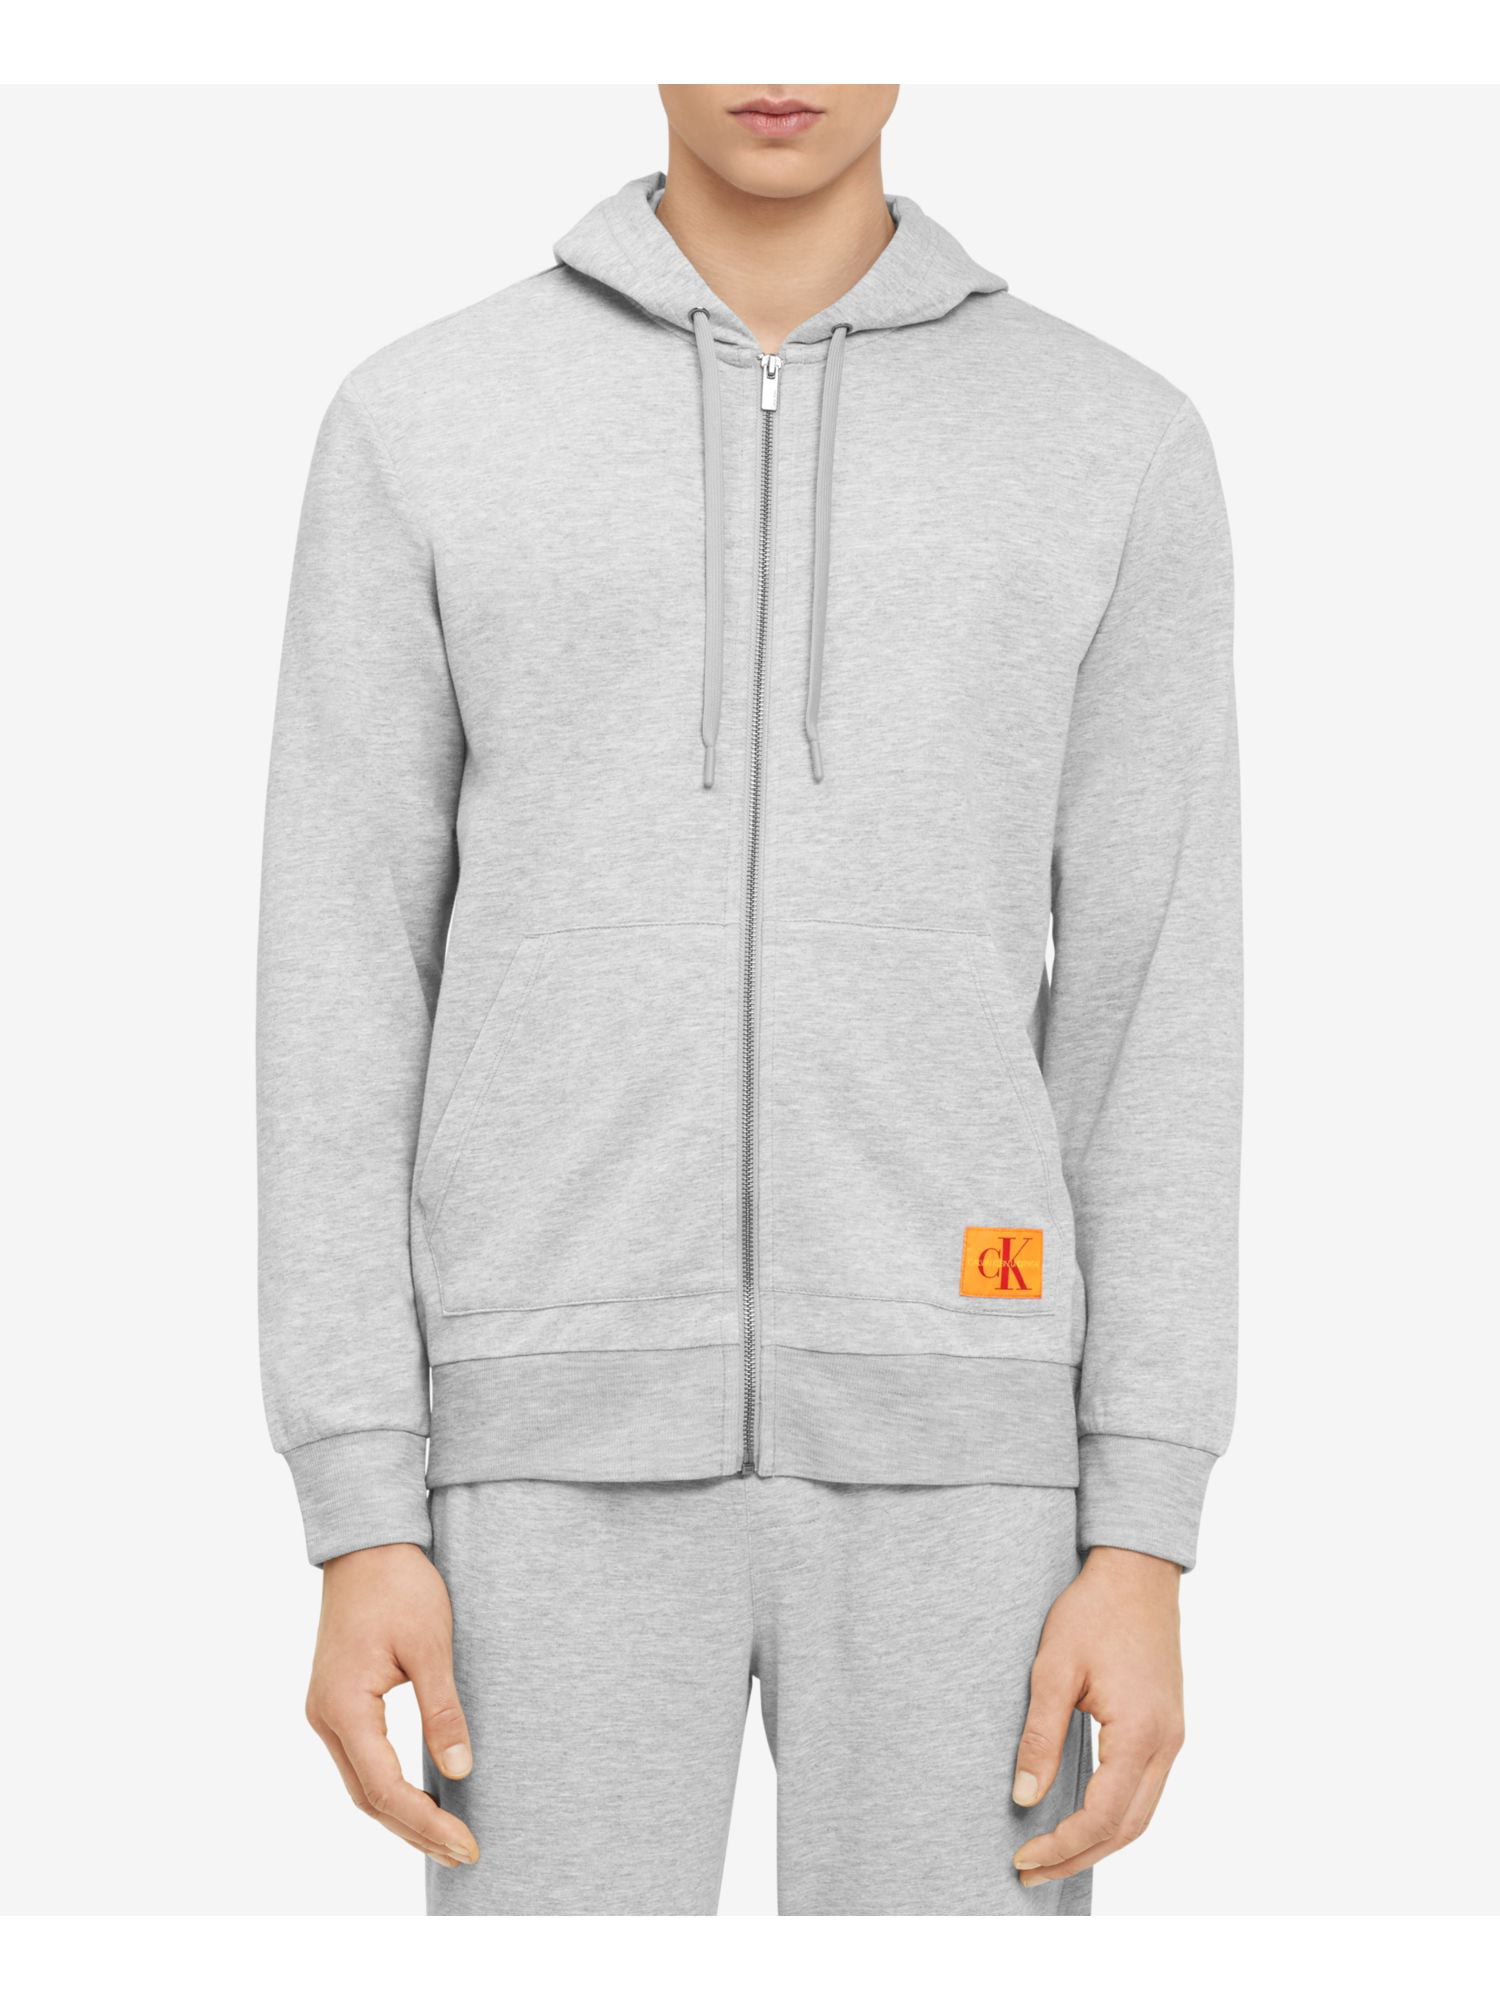 DOPE logo Crew Sweatshirt In Grey Sizes M XL 